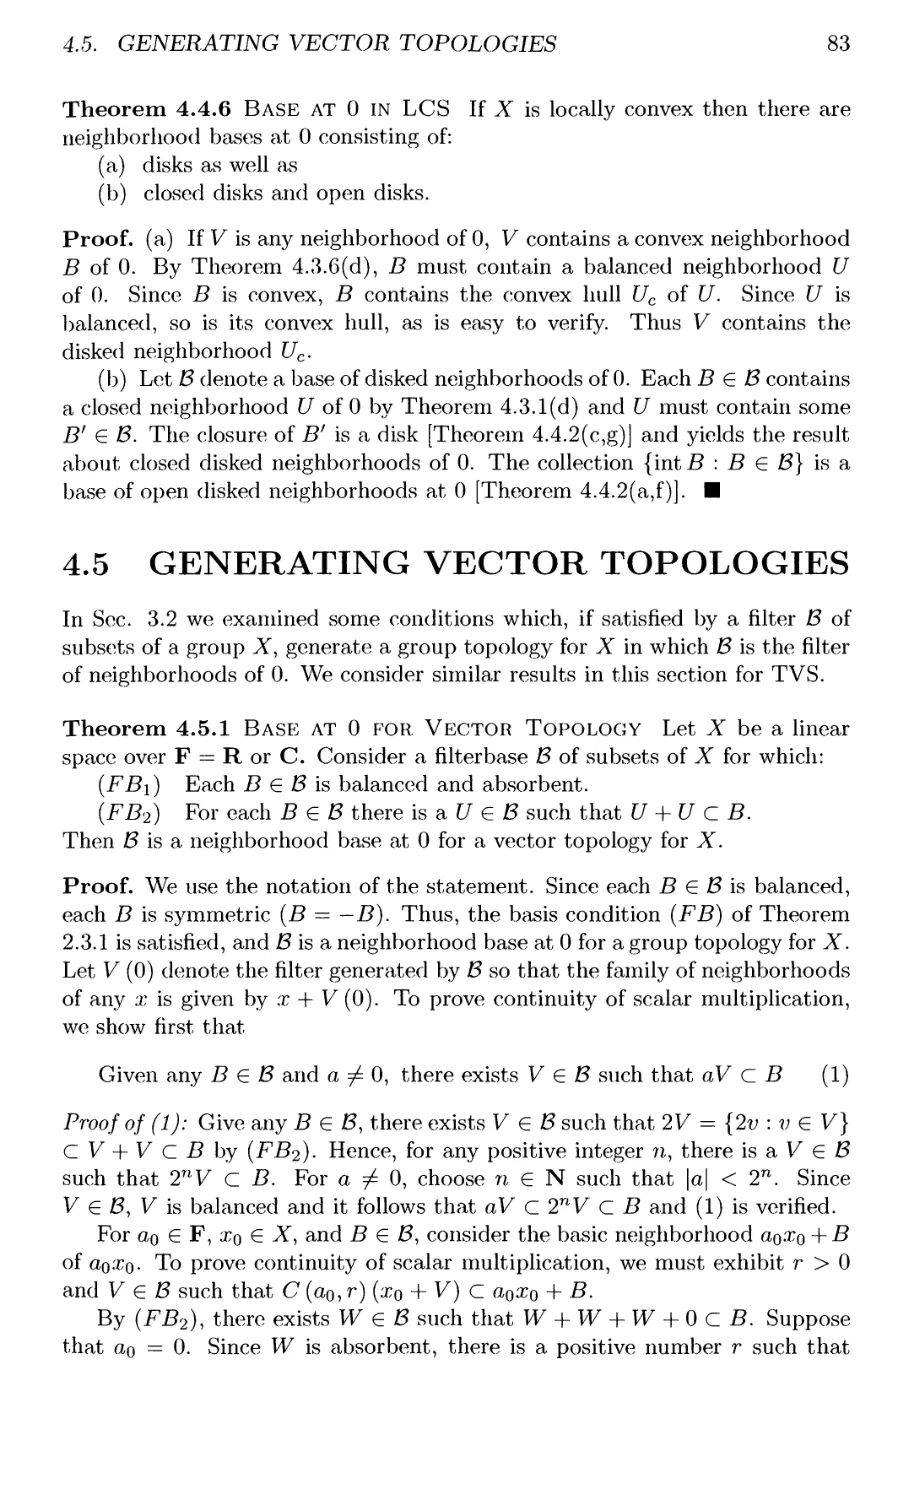 4.5 GENERATING VECTOR TOPOLOGIES